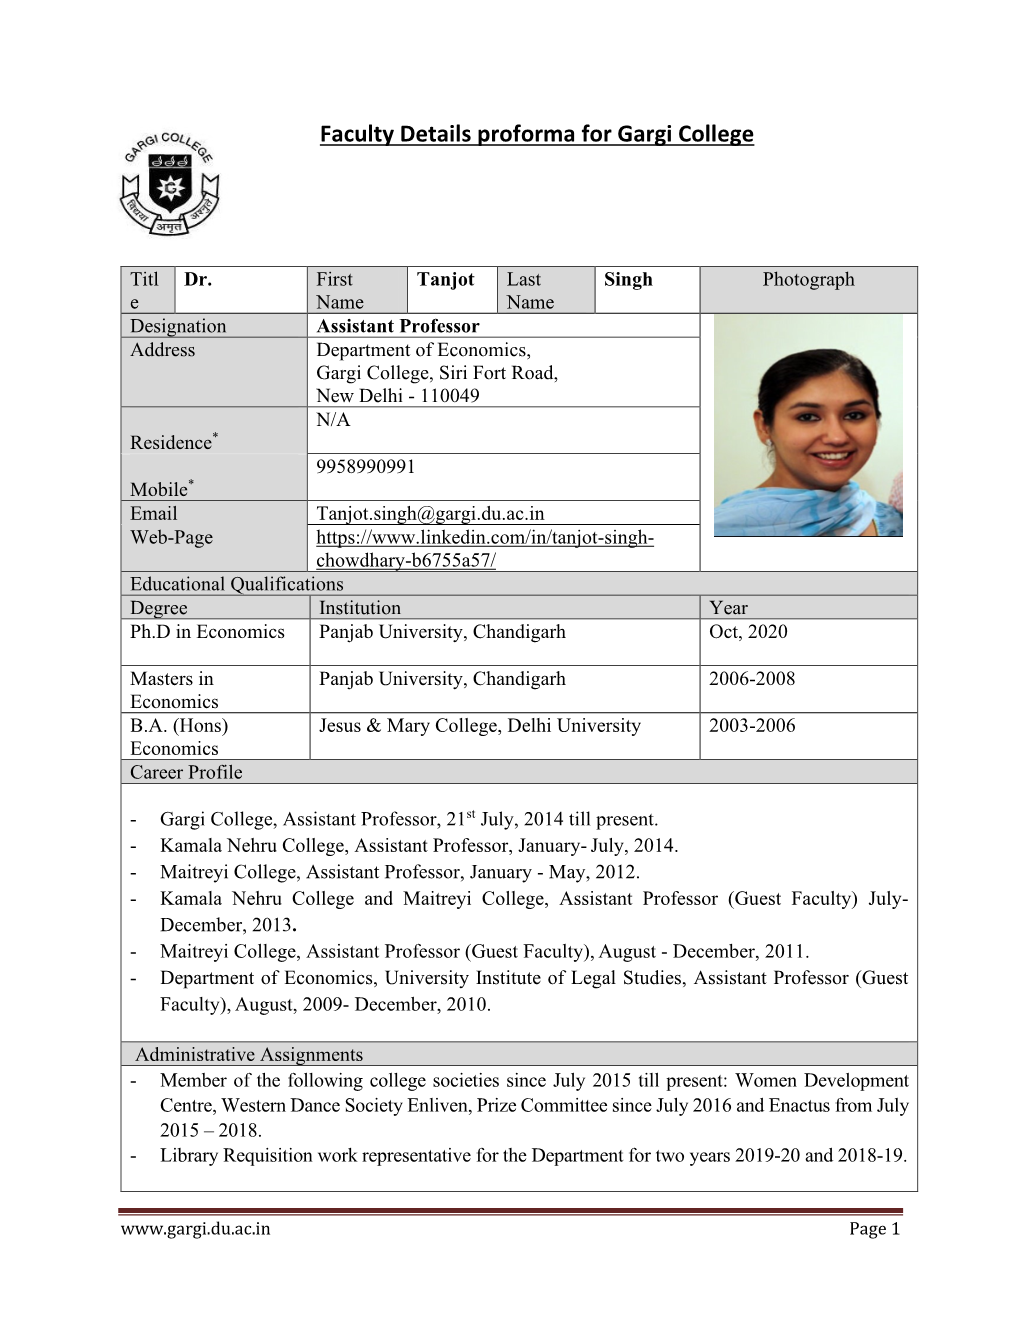 Faculty Details Proforma for Gargi College Website